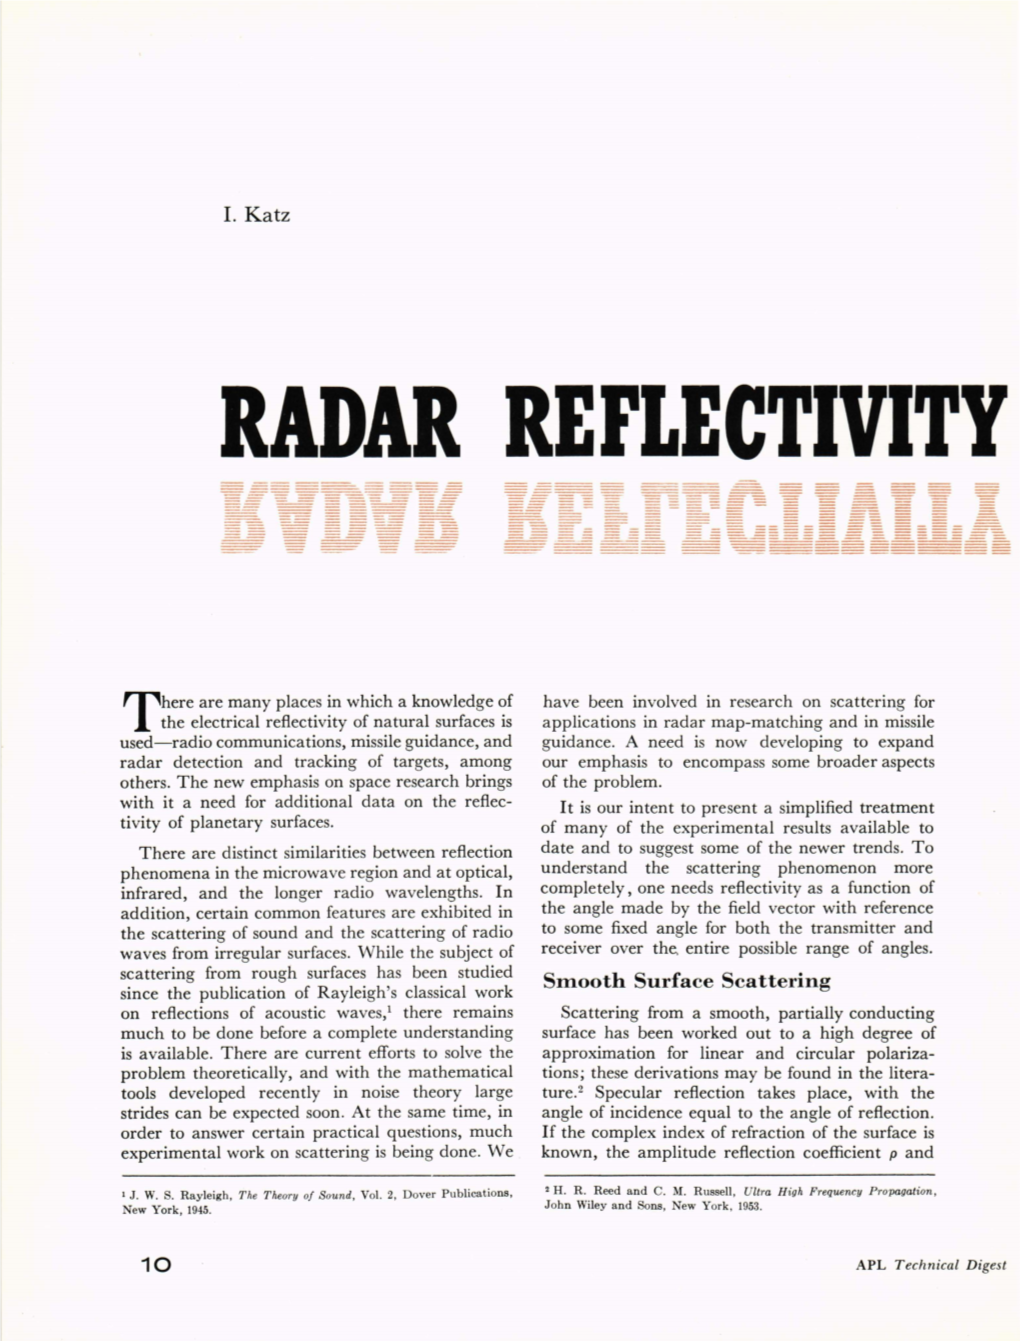 Radar Reflectivity of the Earth's Surface